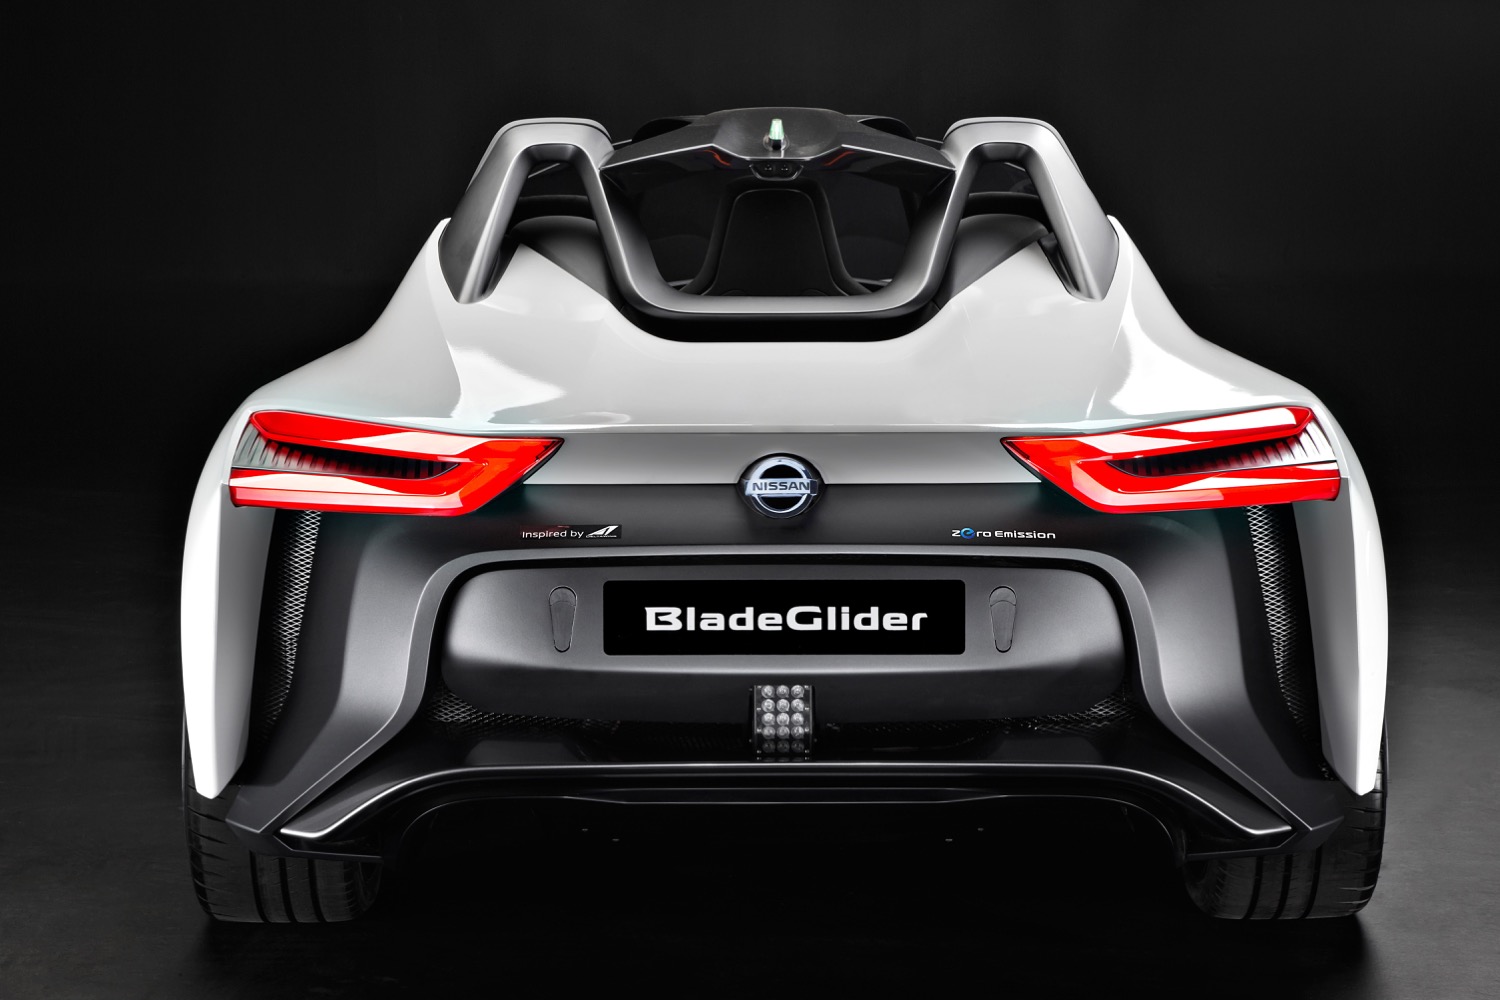 Nissan BladeGlider prototype